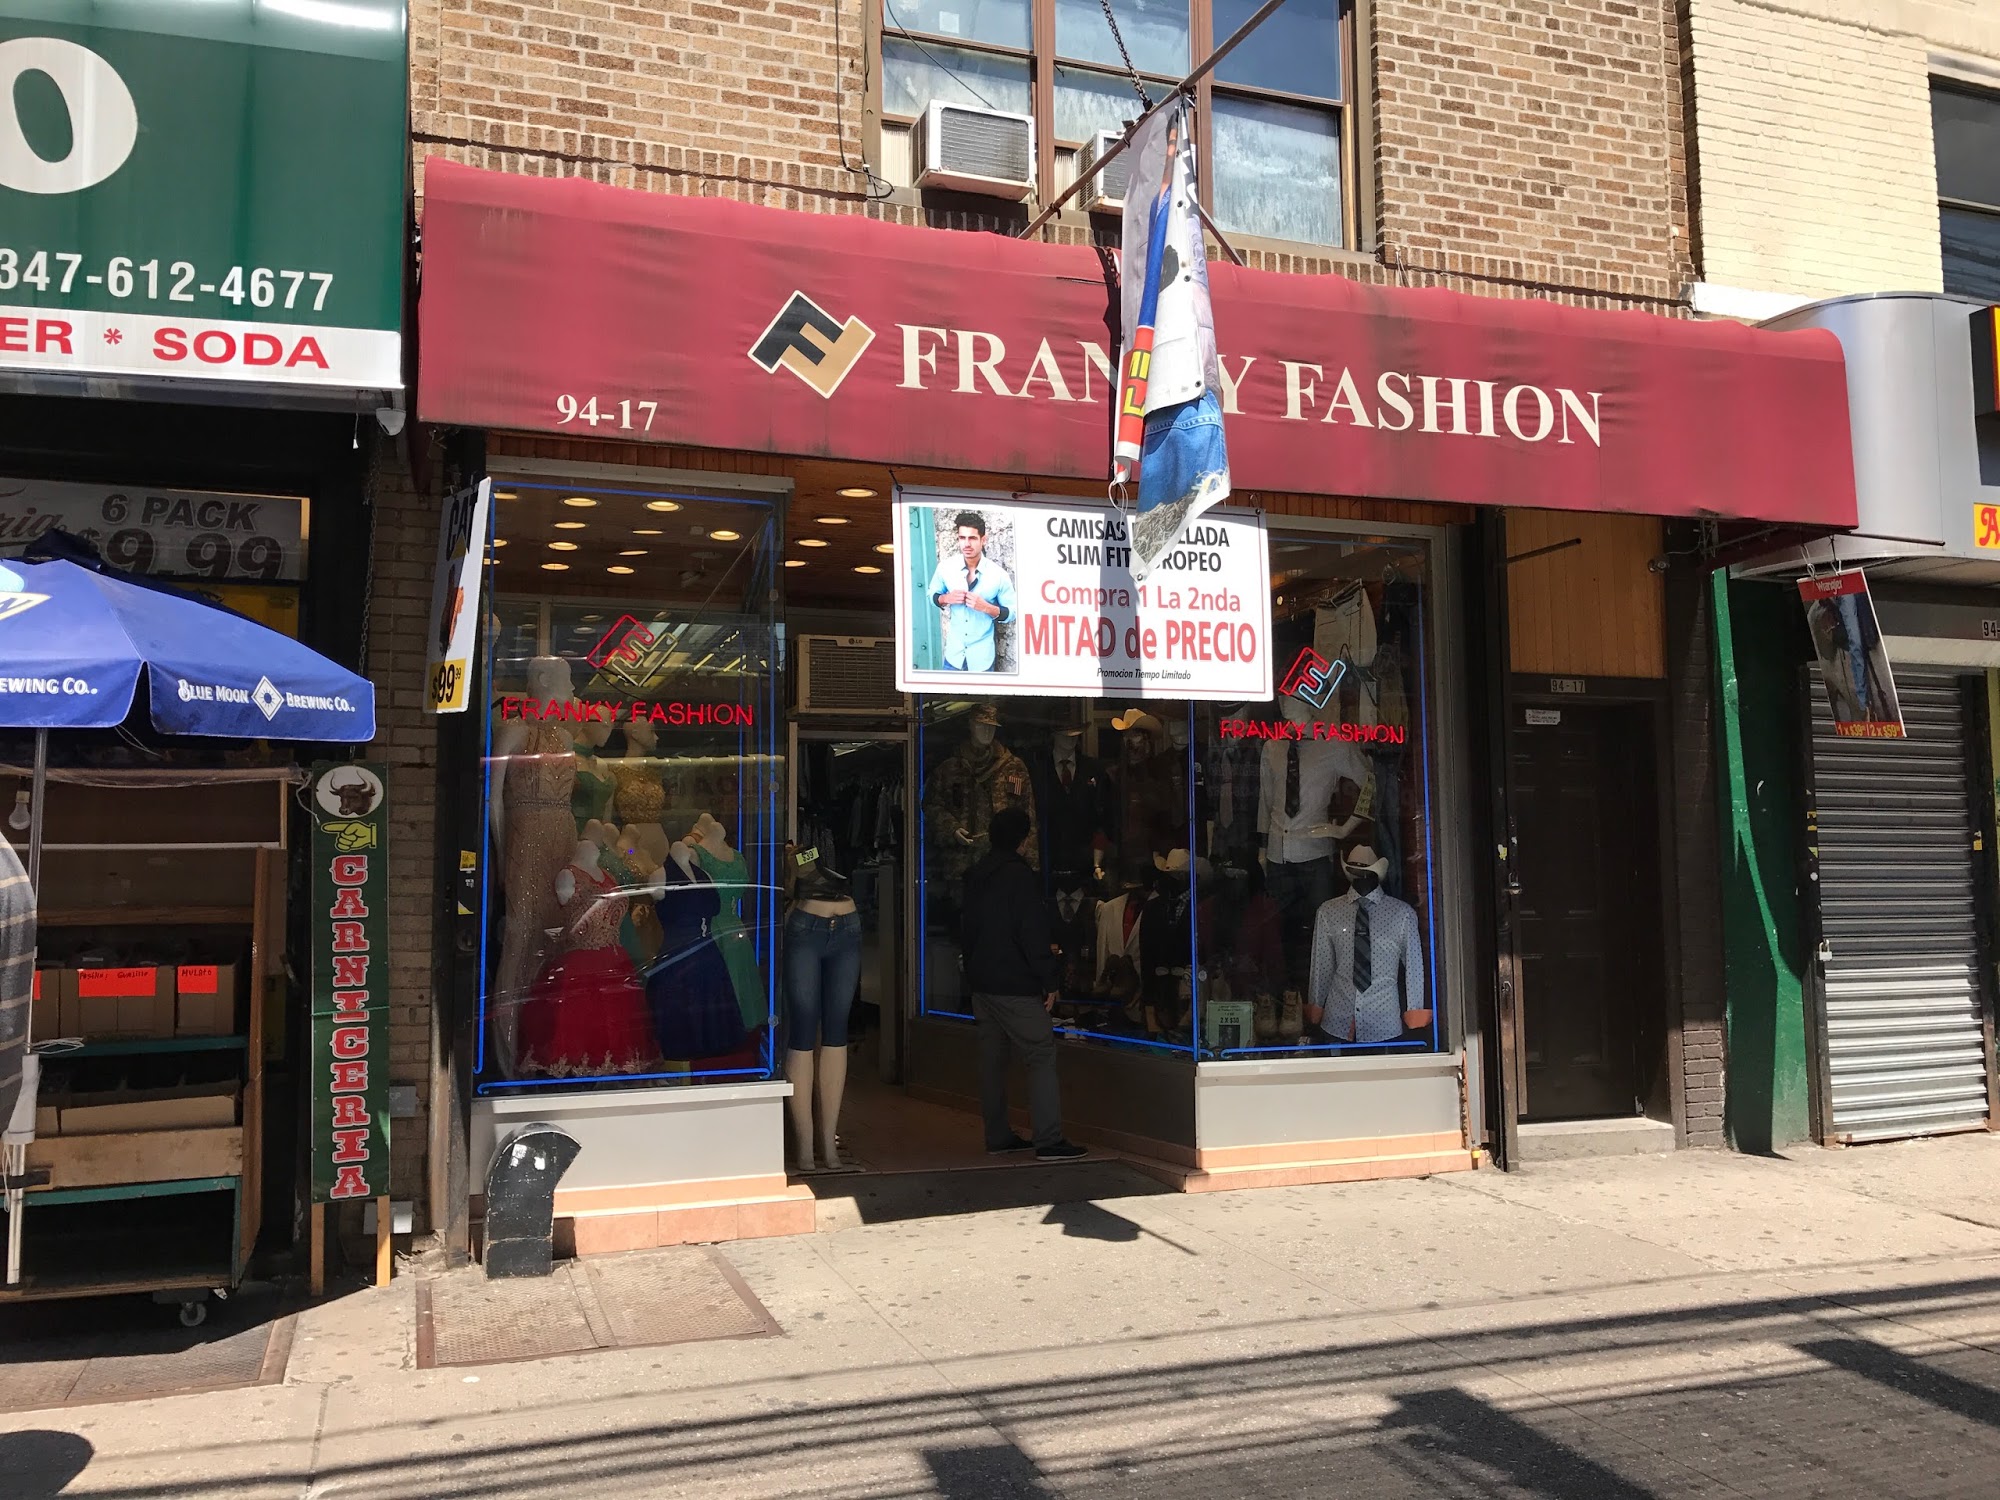 Franky Fashion